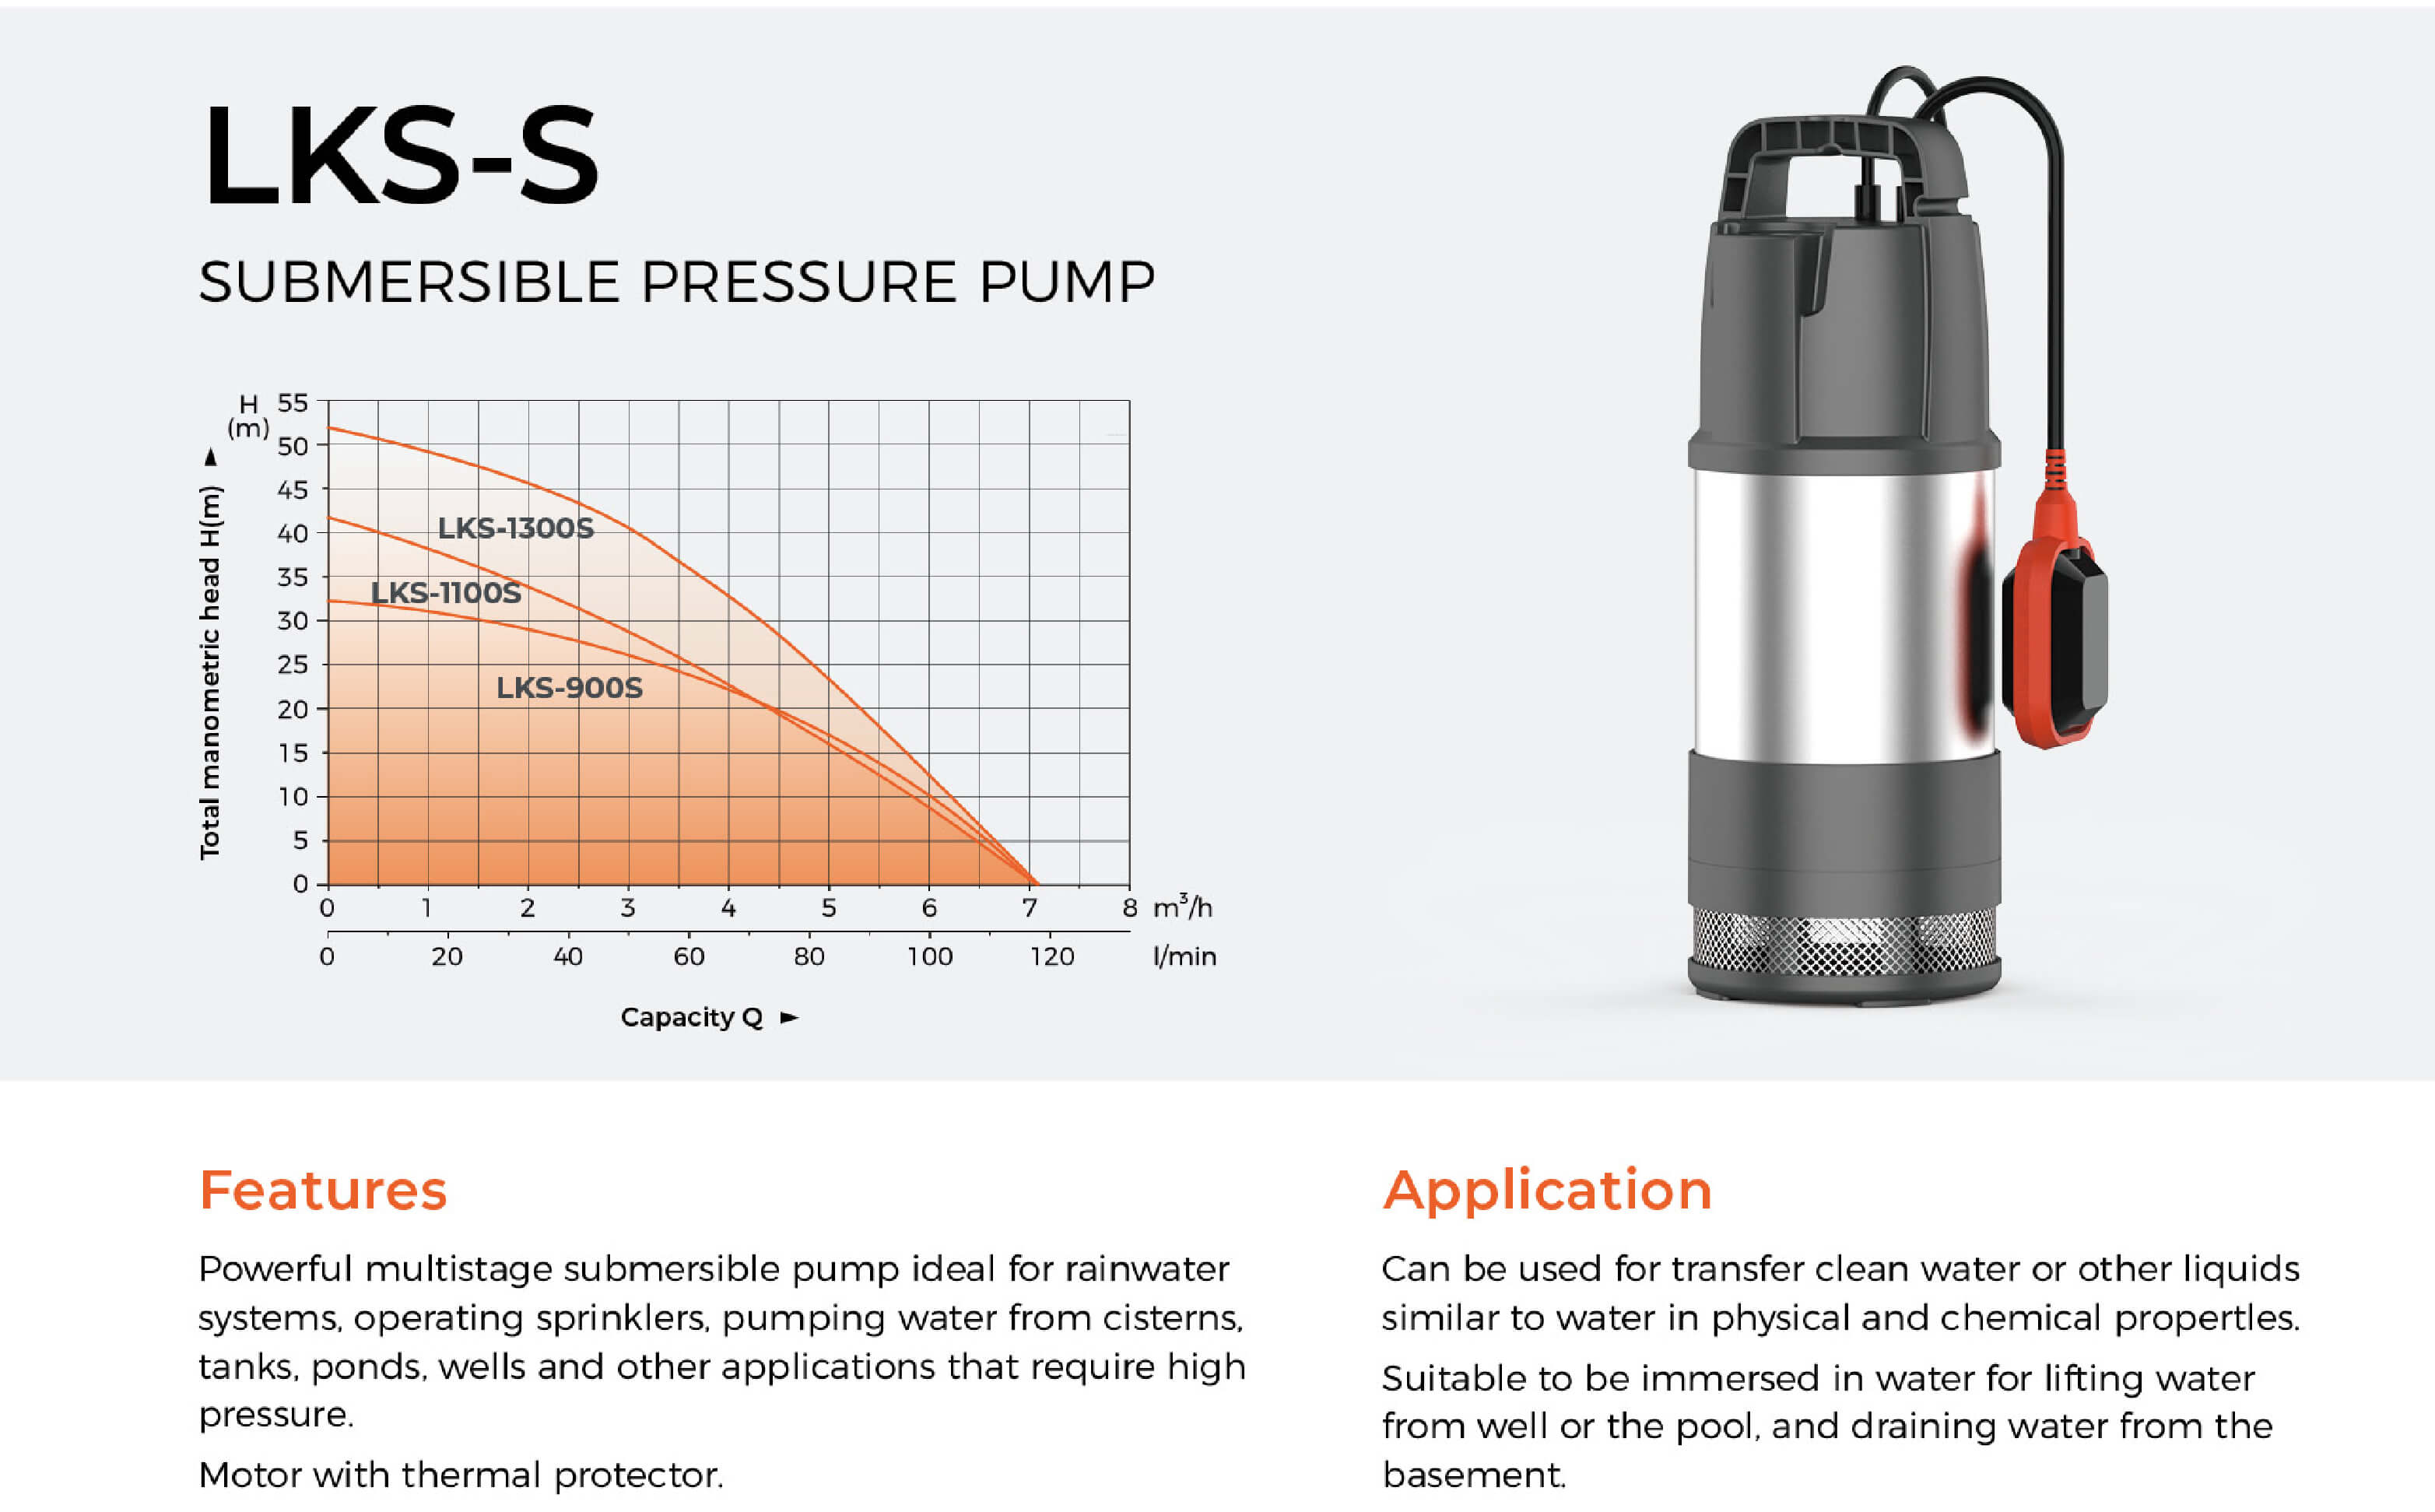 LKS-S Submersible Pressure Pump Features